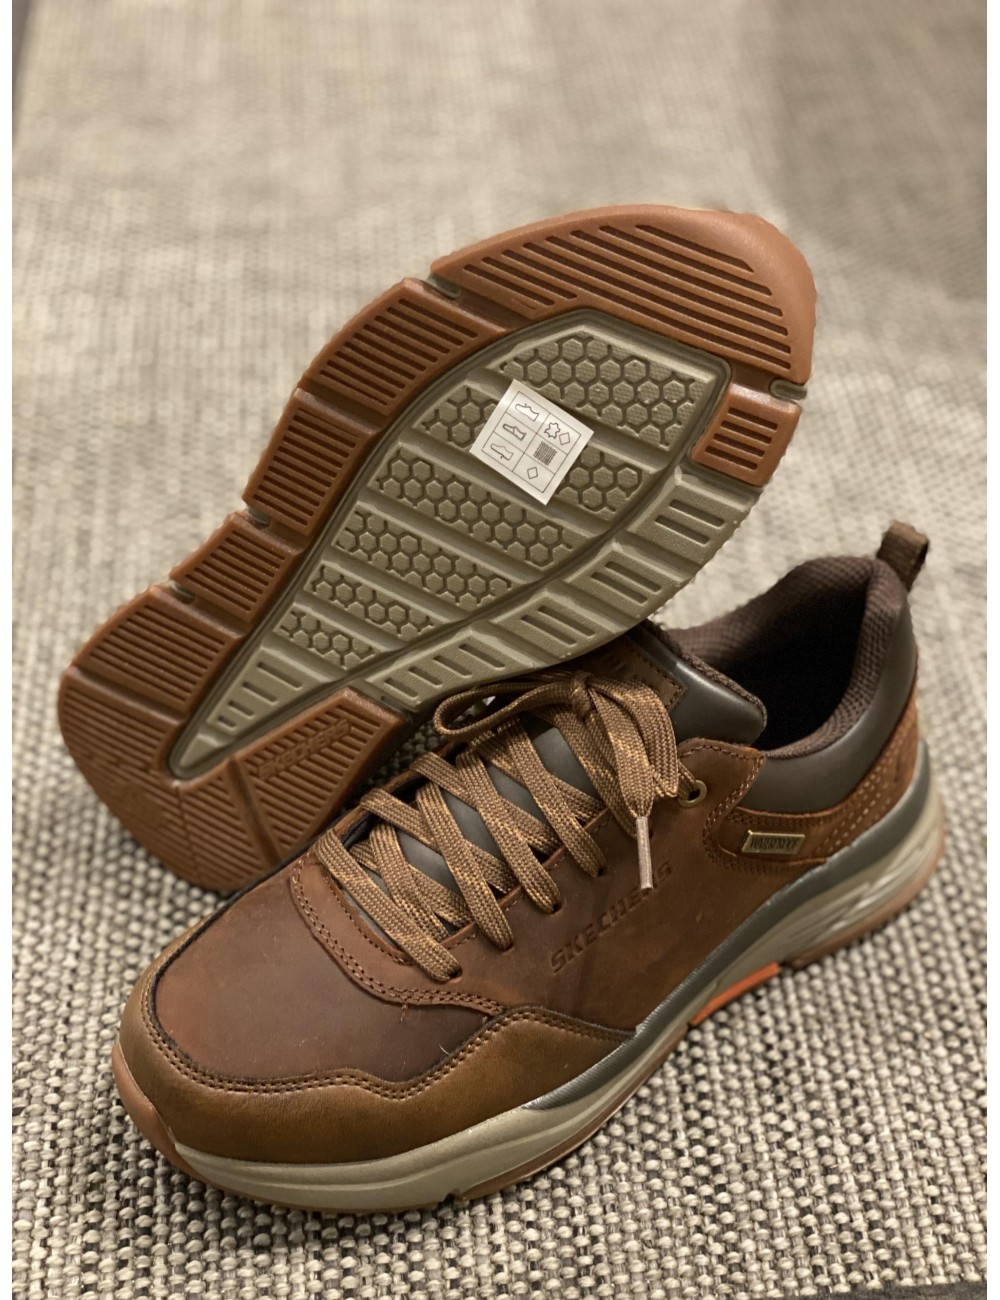 Zapato Zapato Skechers Relaxed Fit Benago en color marrón com membrana impermeable.